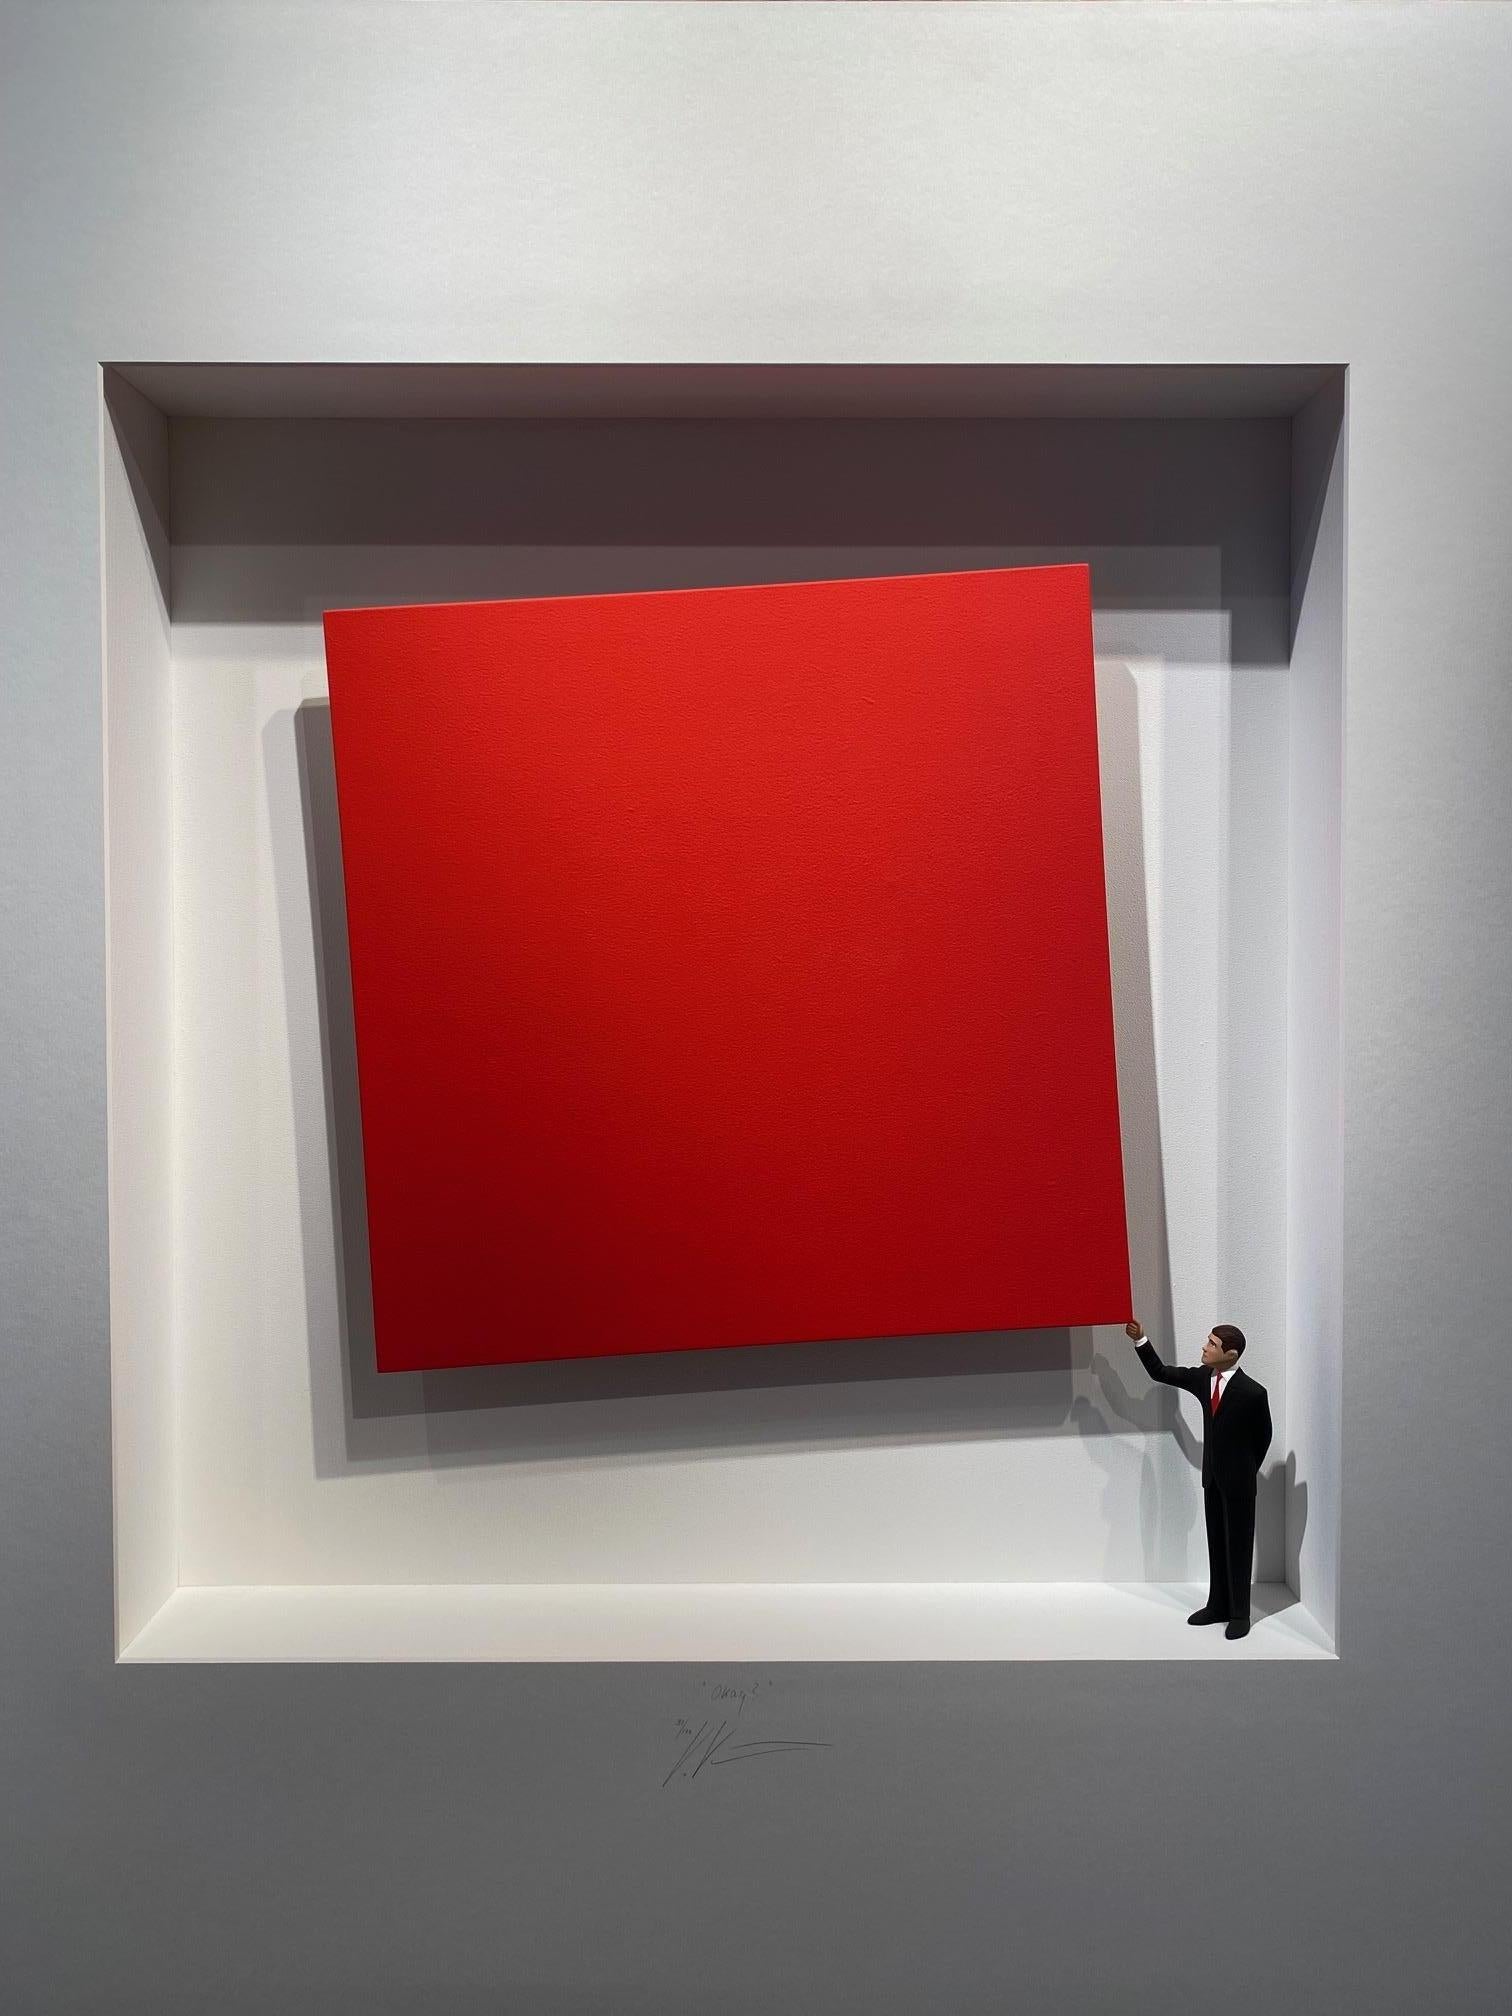 Okay? - mixed media art work, contemporary, minimalist red square constructivist - Mixed Media Art by Volker Kuhn